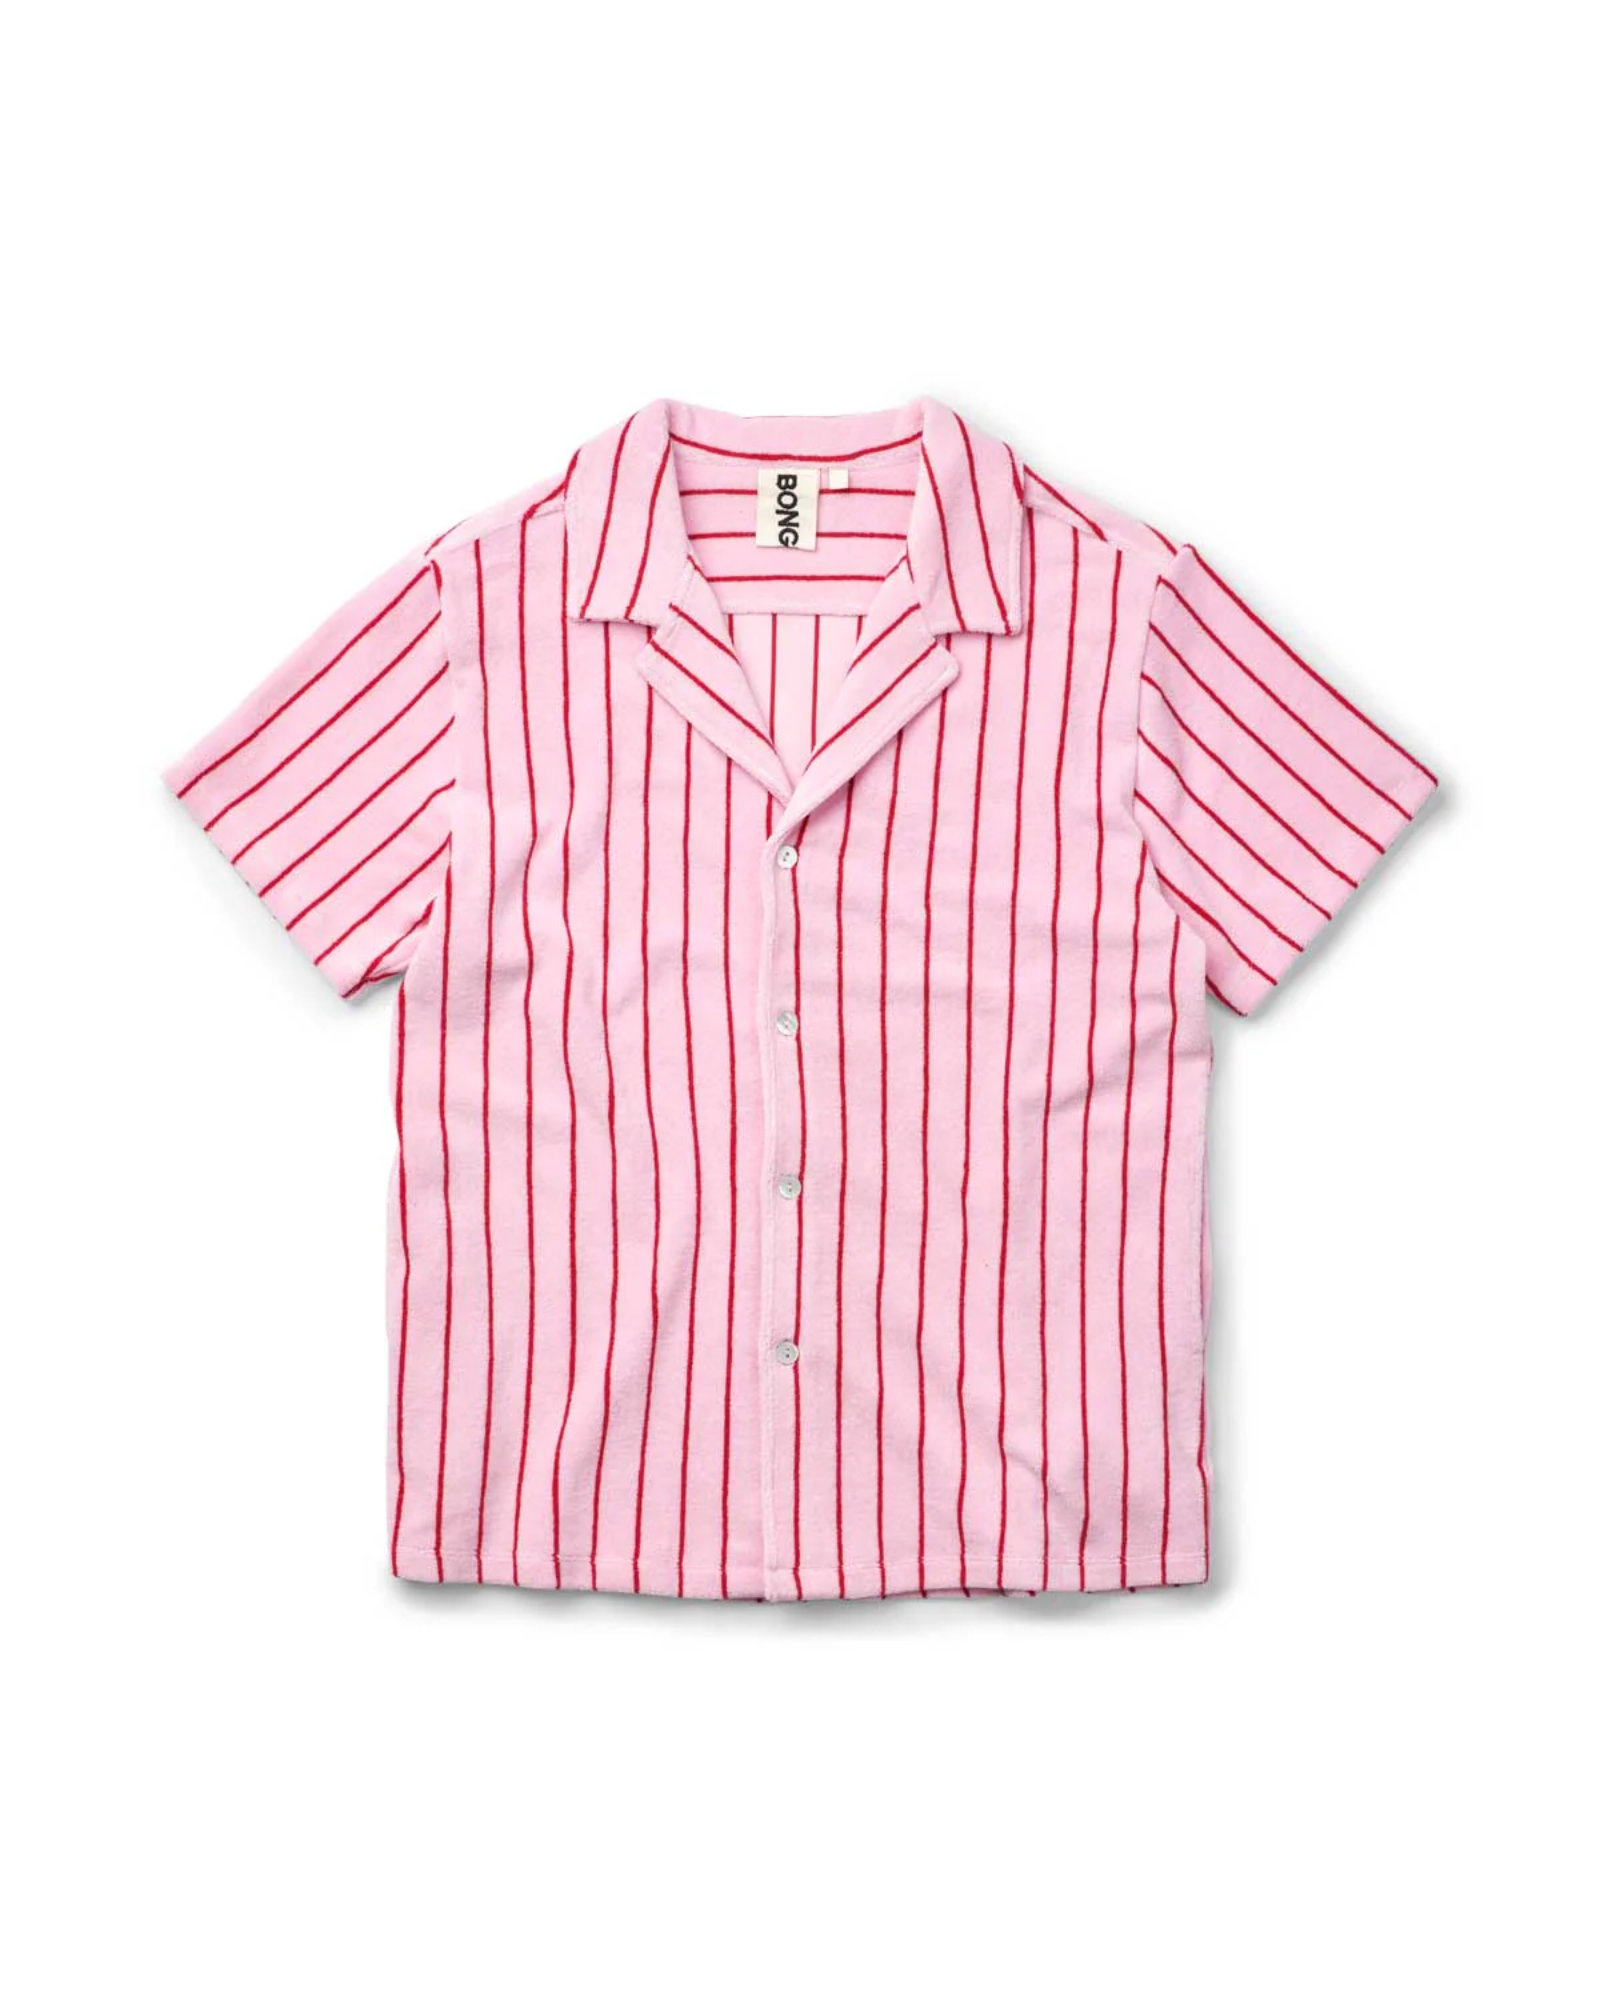 Bongusta - T-Shirt NARAM Baby pink & ski patrol red - size 0 (SM) - Baby pink & ski patrol red